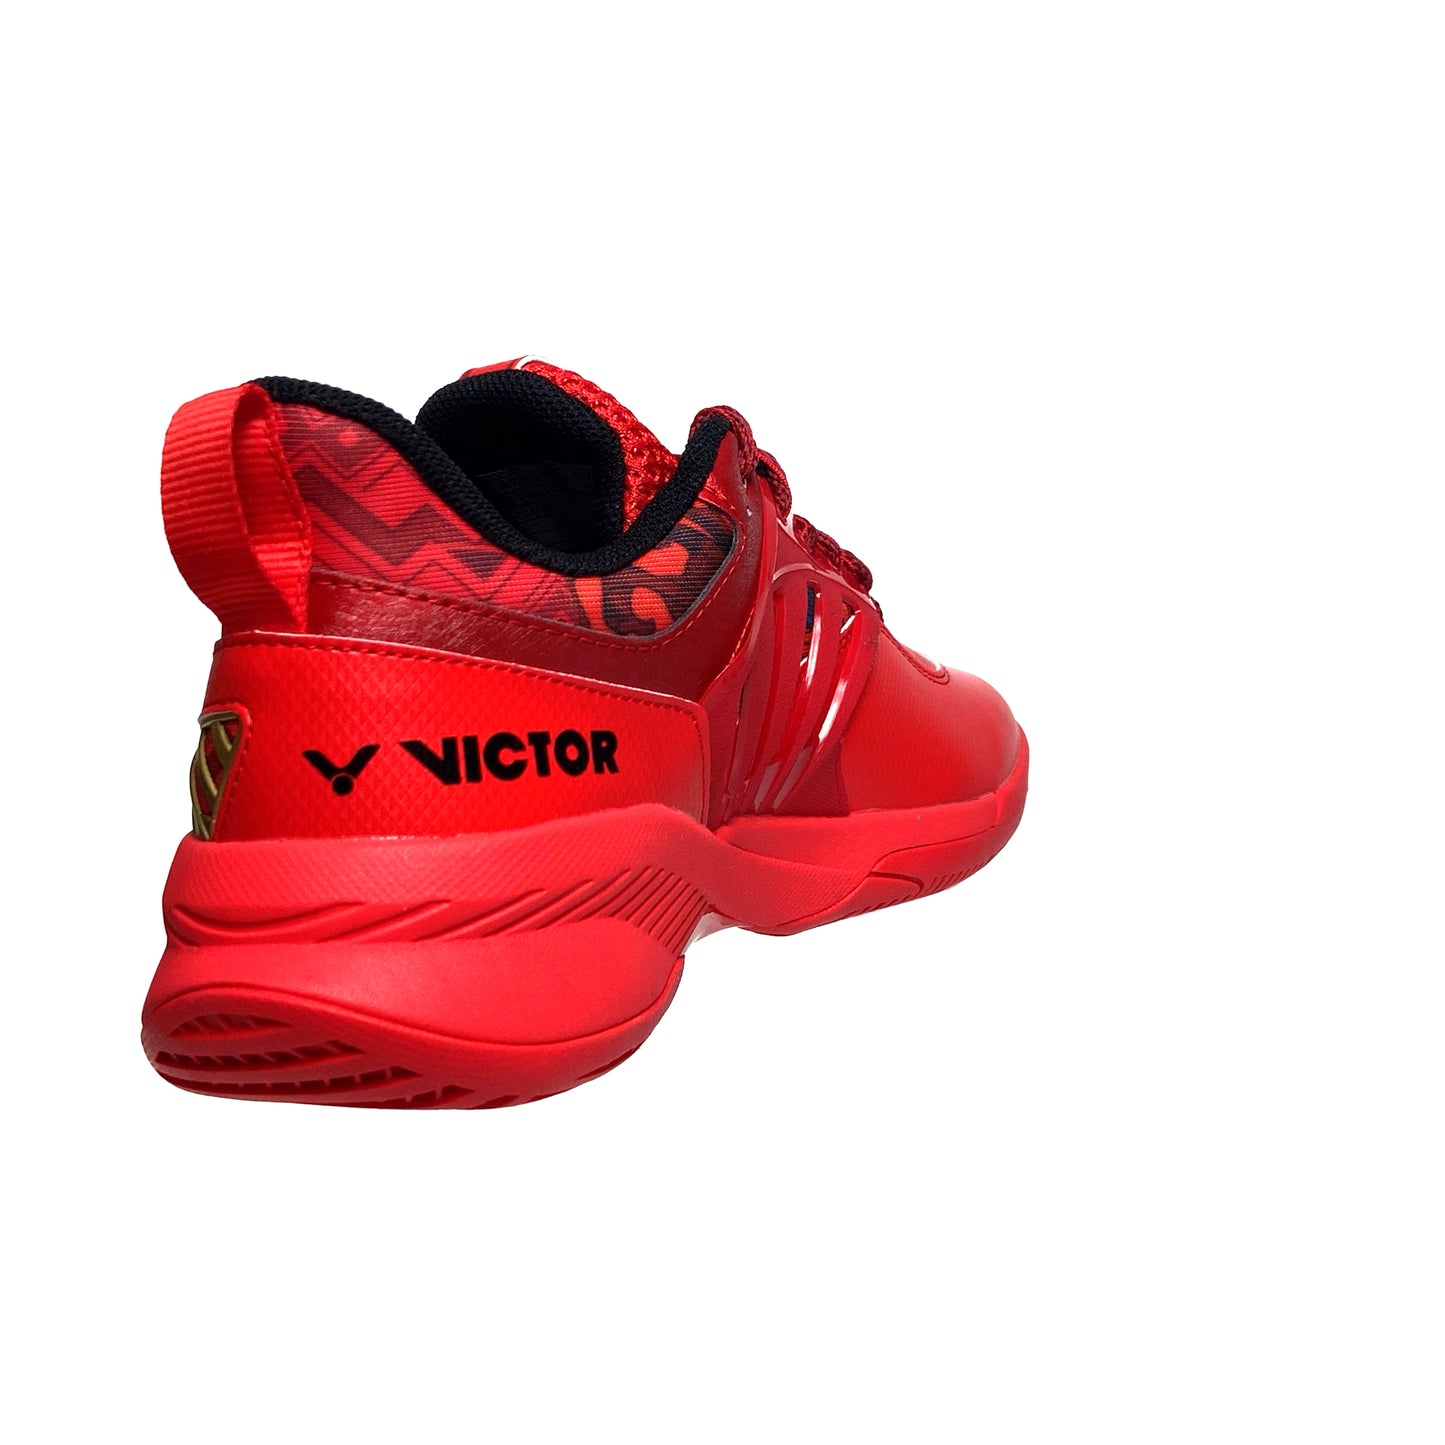 Victor Men's Indoor CNY Edition A790CNY-EX D Red